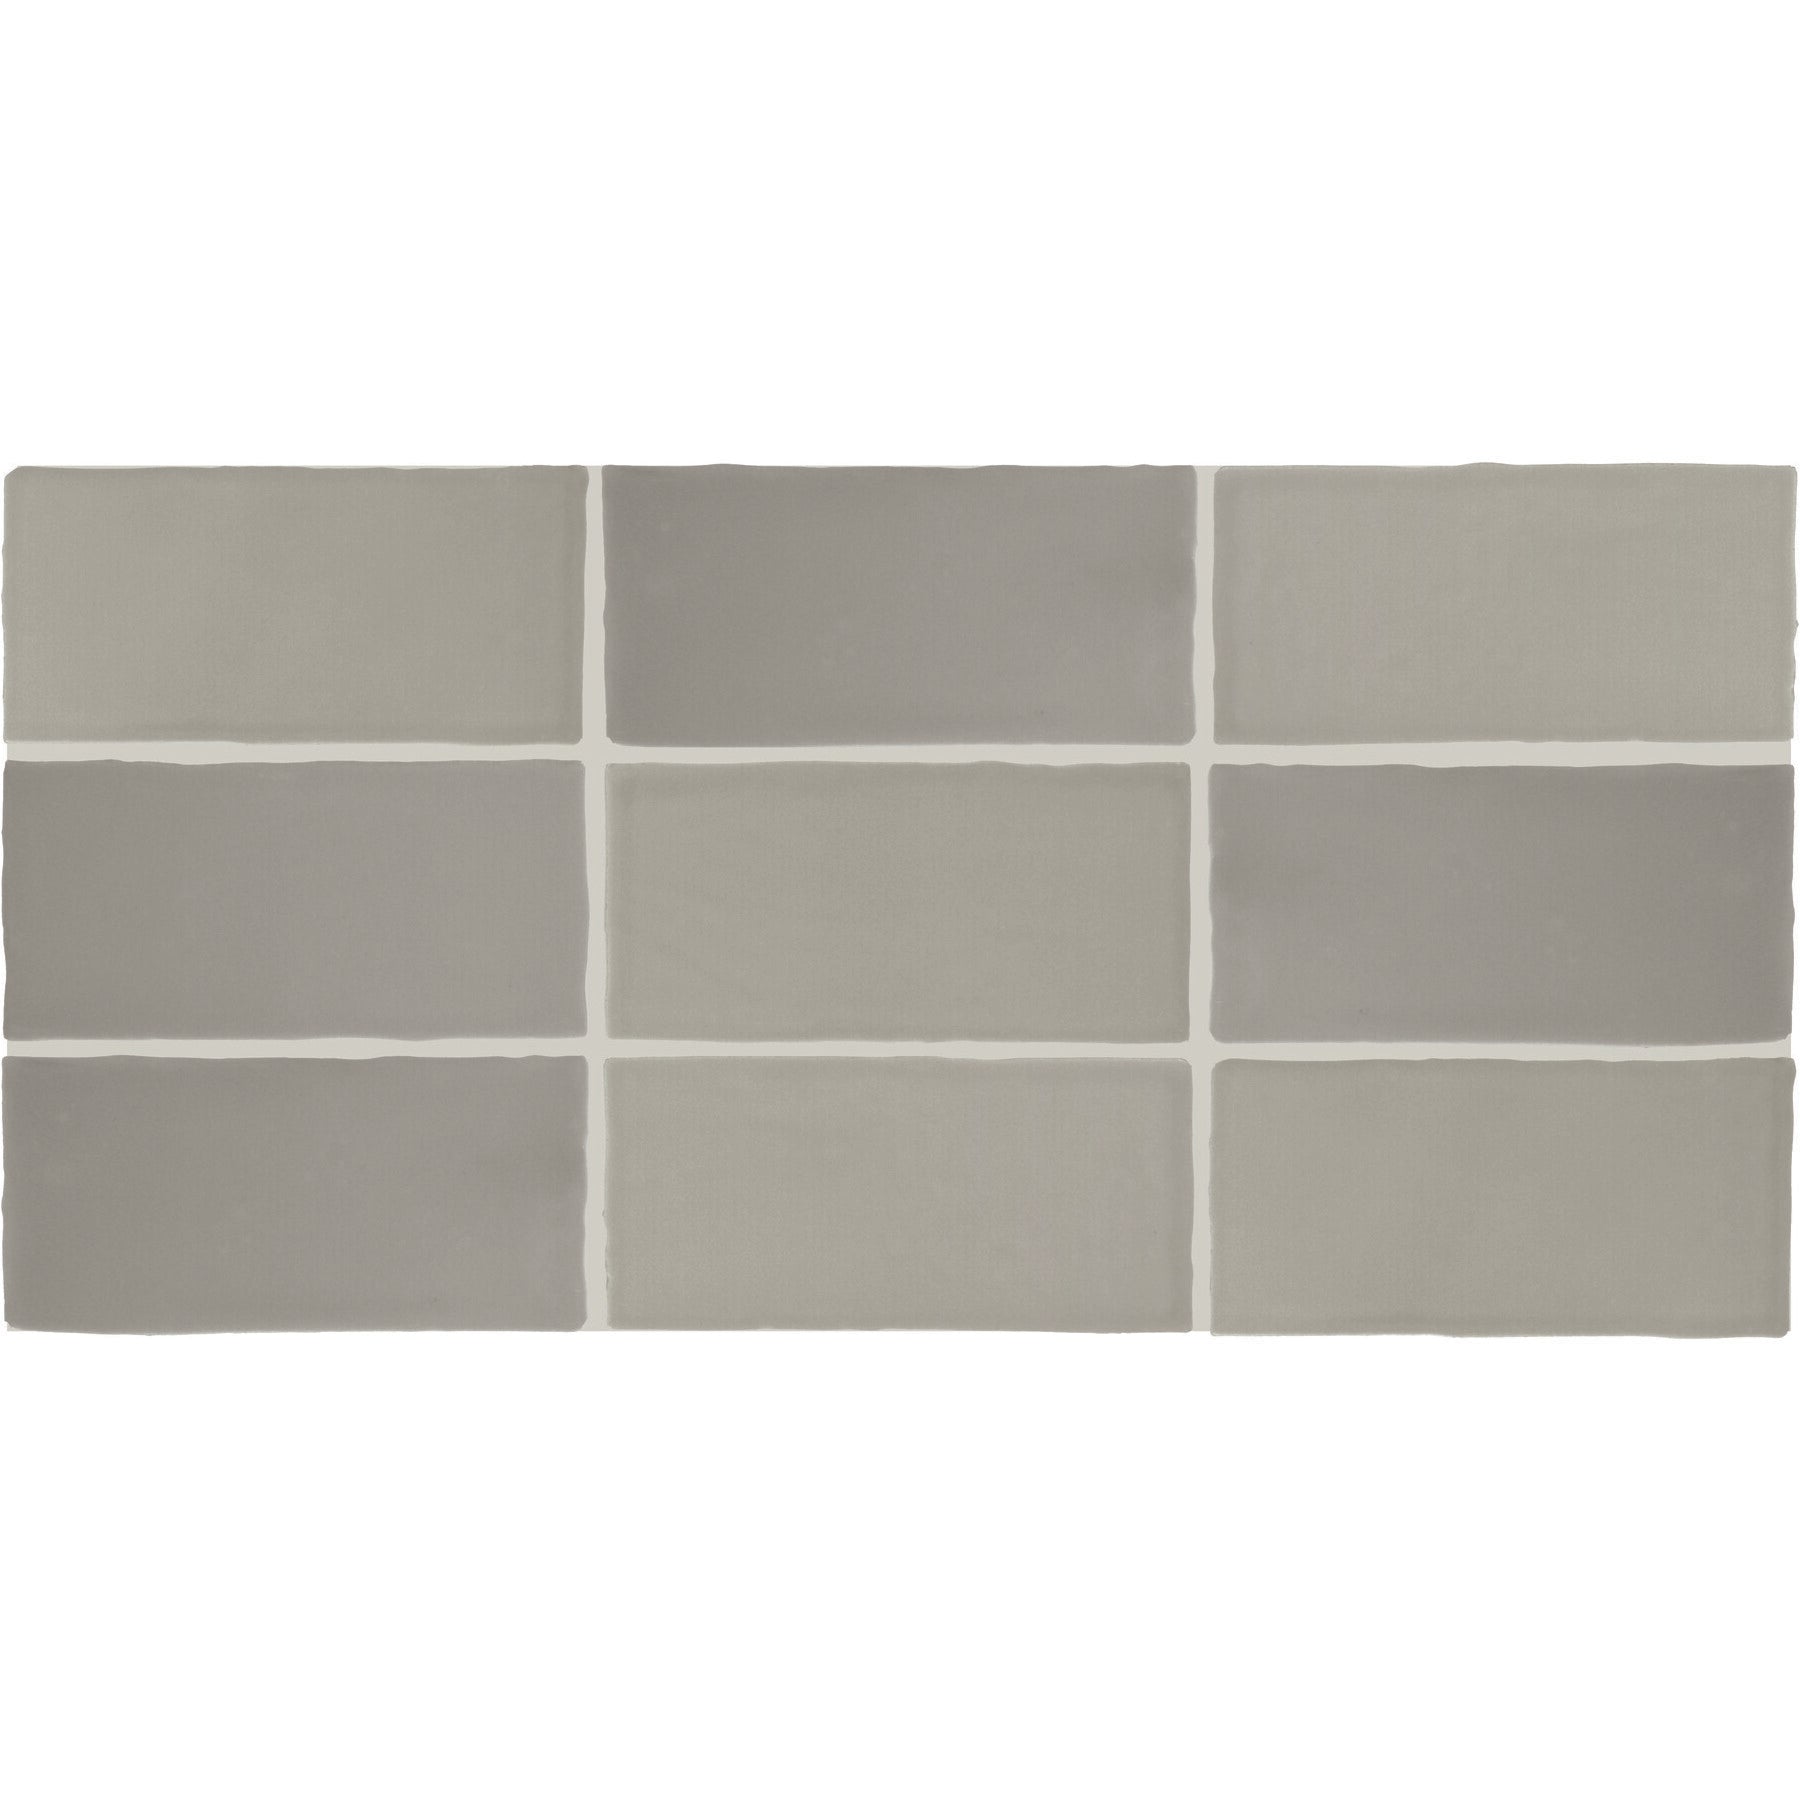 Daltile - Farrier - 2.5 in. x 5 in. Glazed Ceramic Wall Tile - Dartmoor Grey